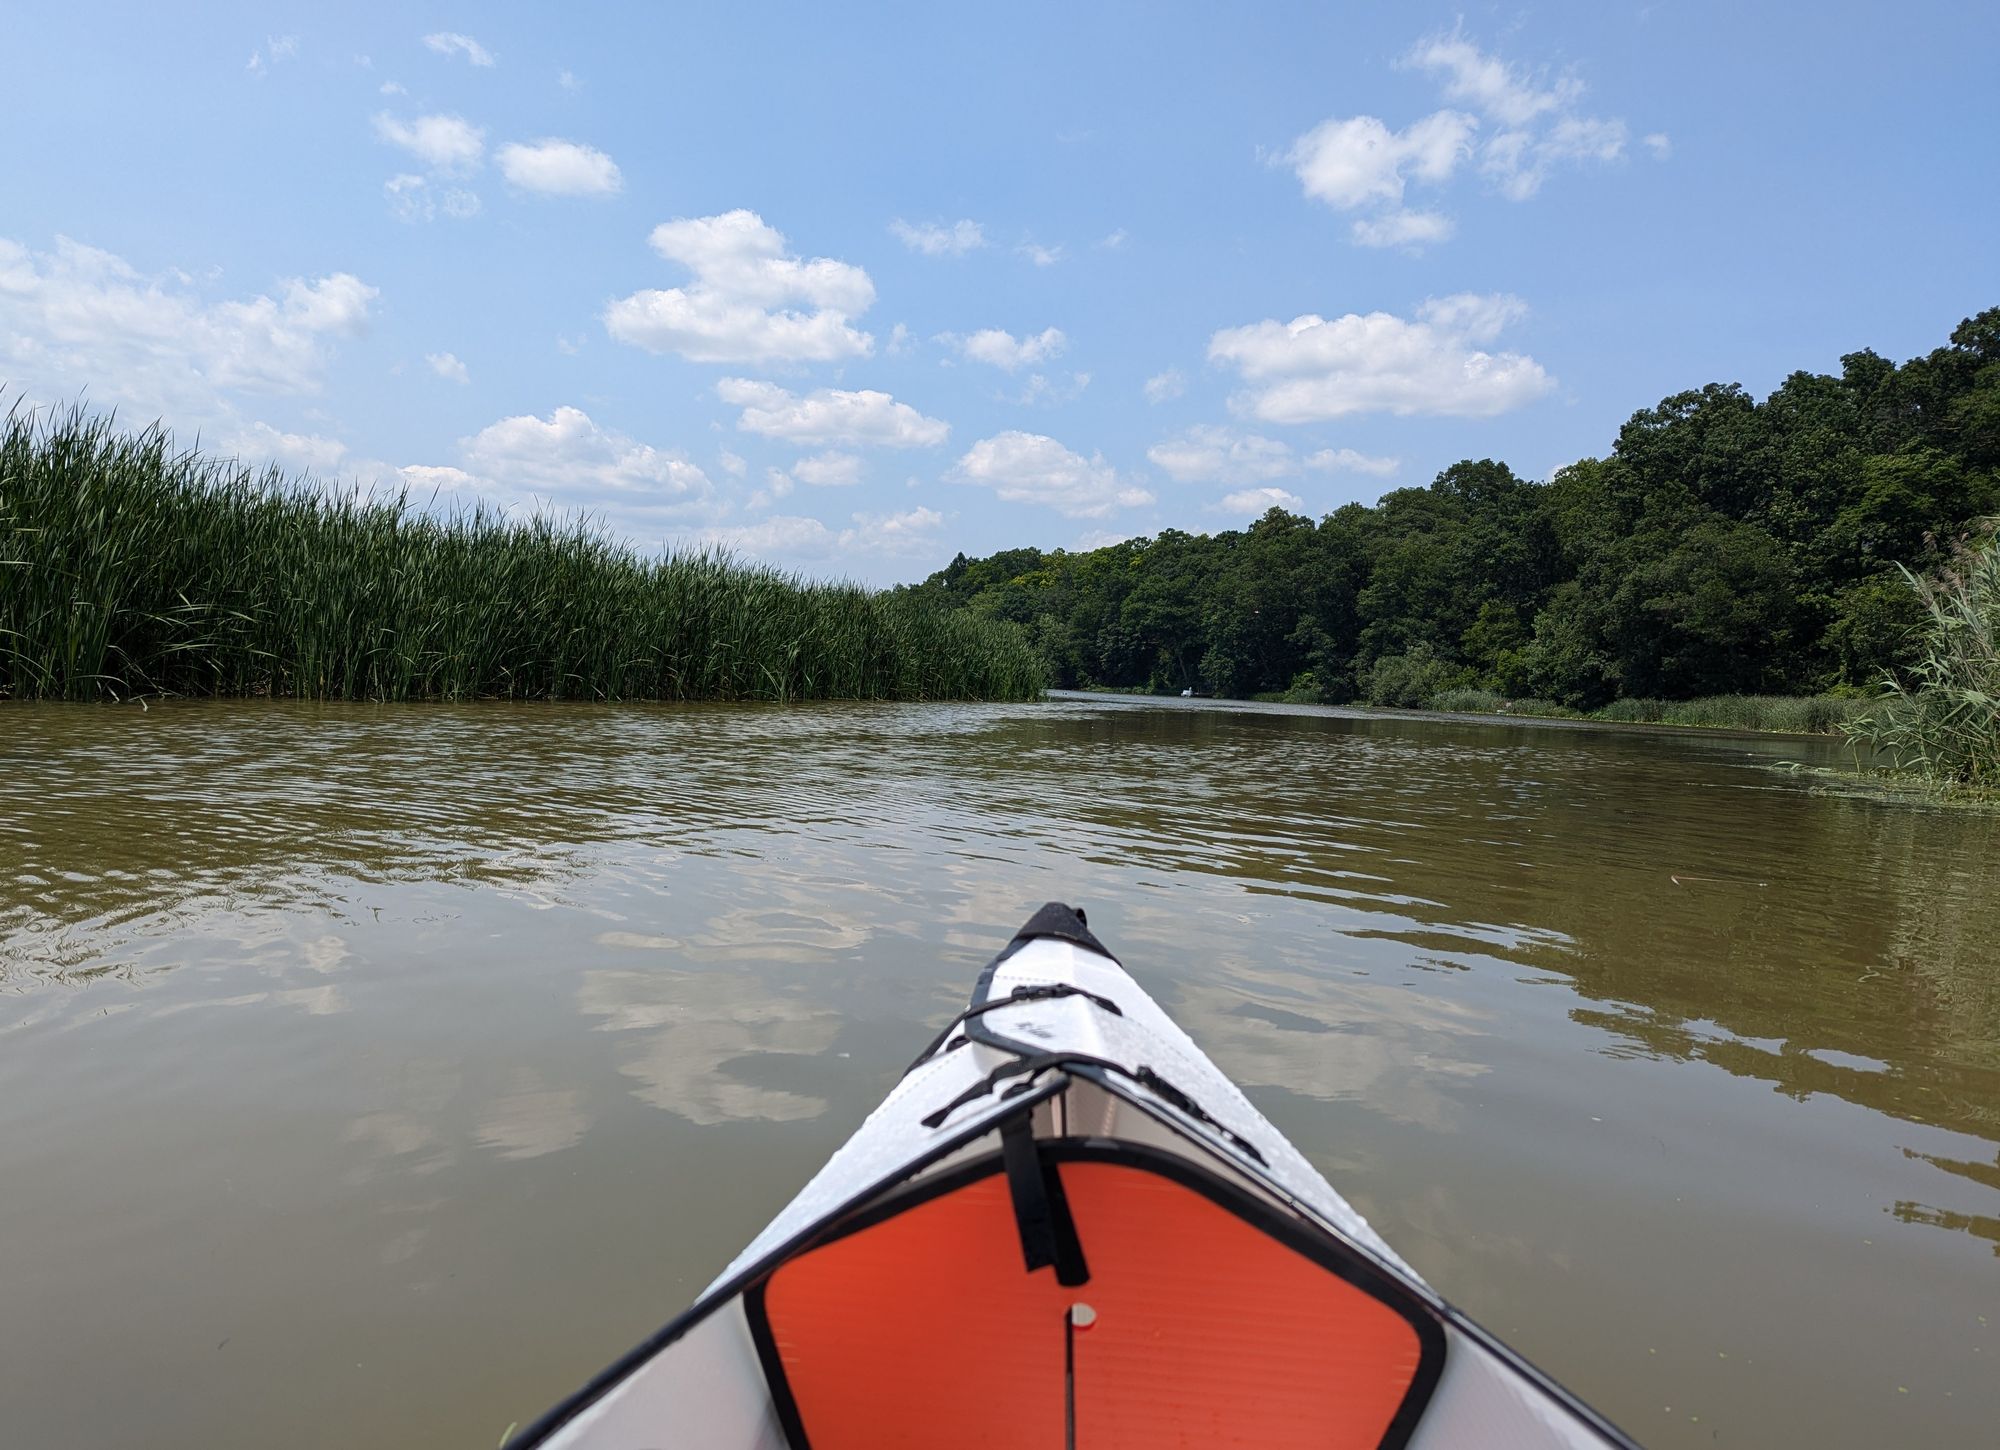 Kayaking the Humber River